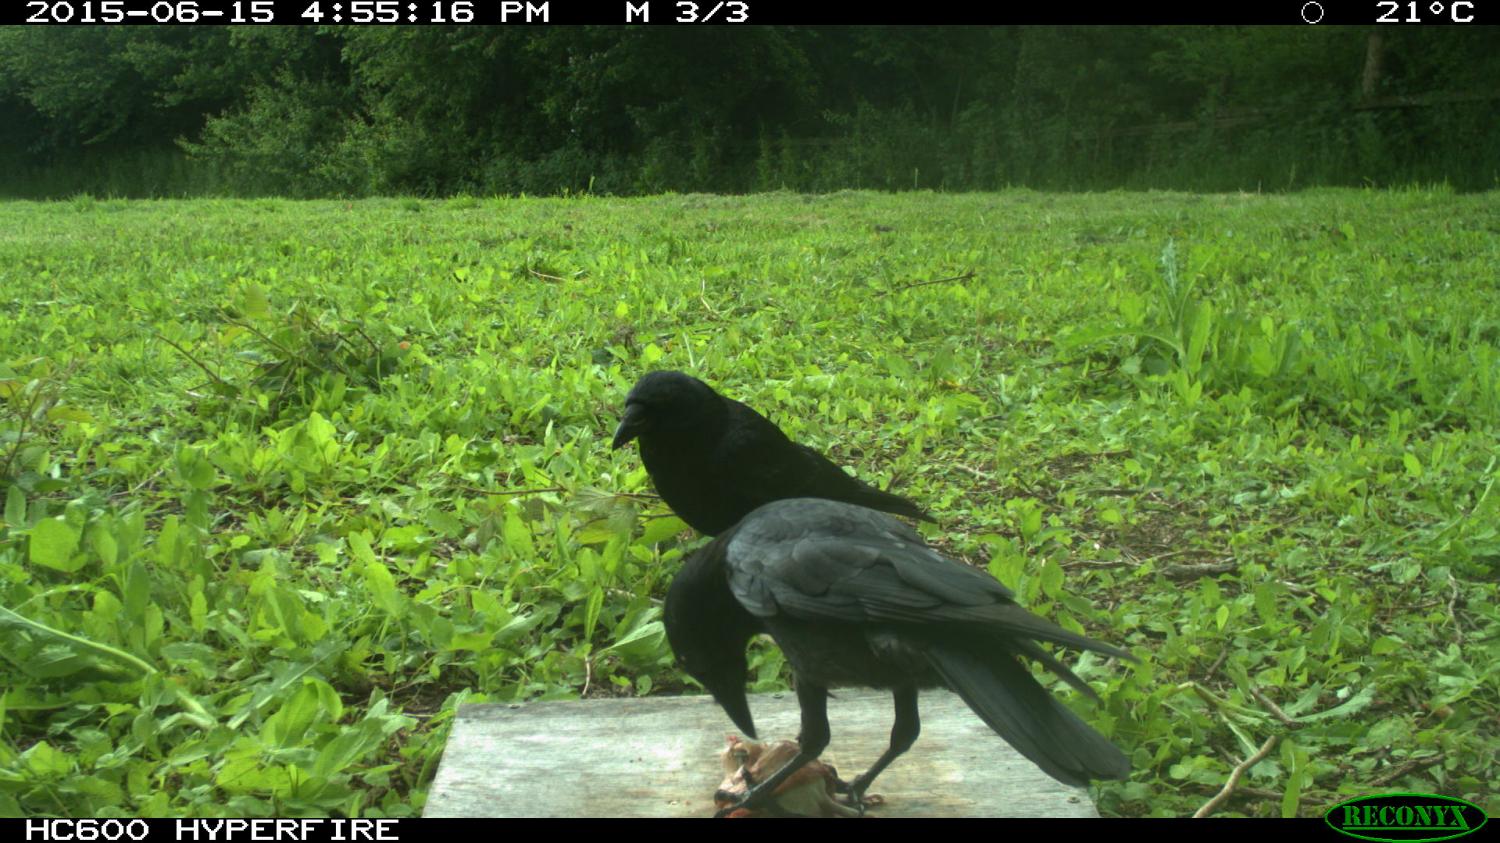 Scavenger crows provide public service, research shows